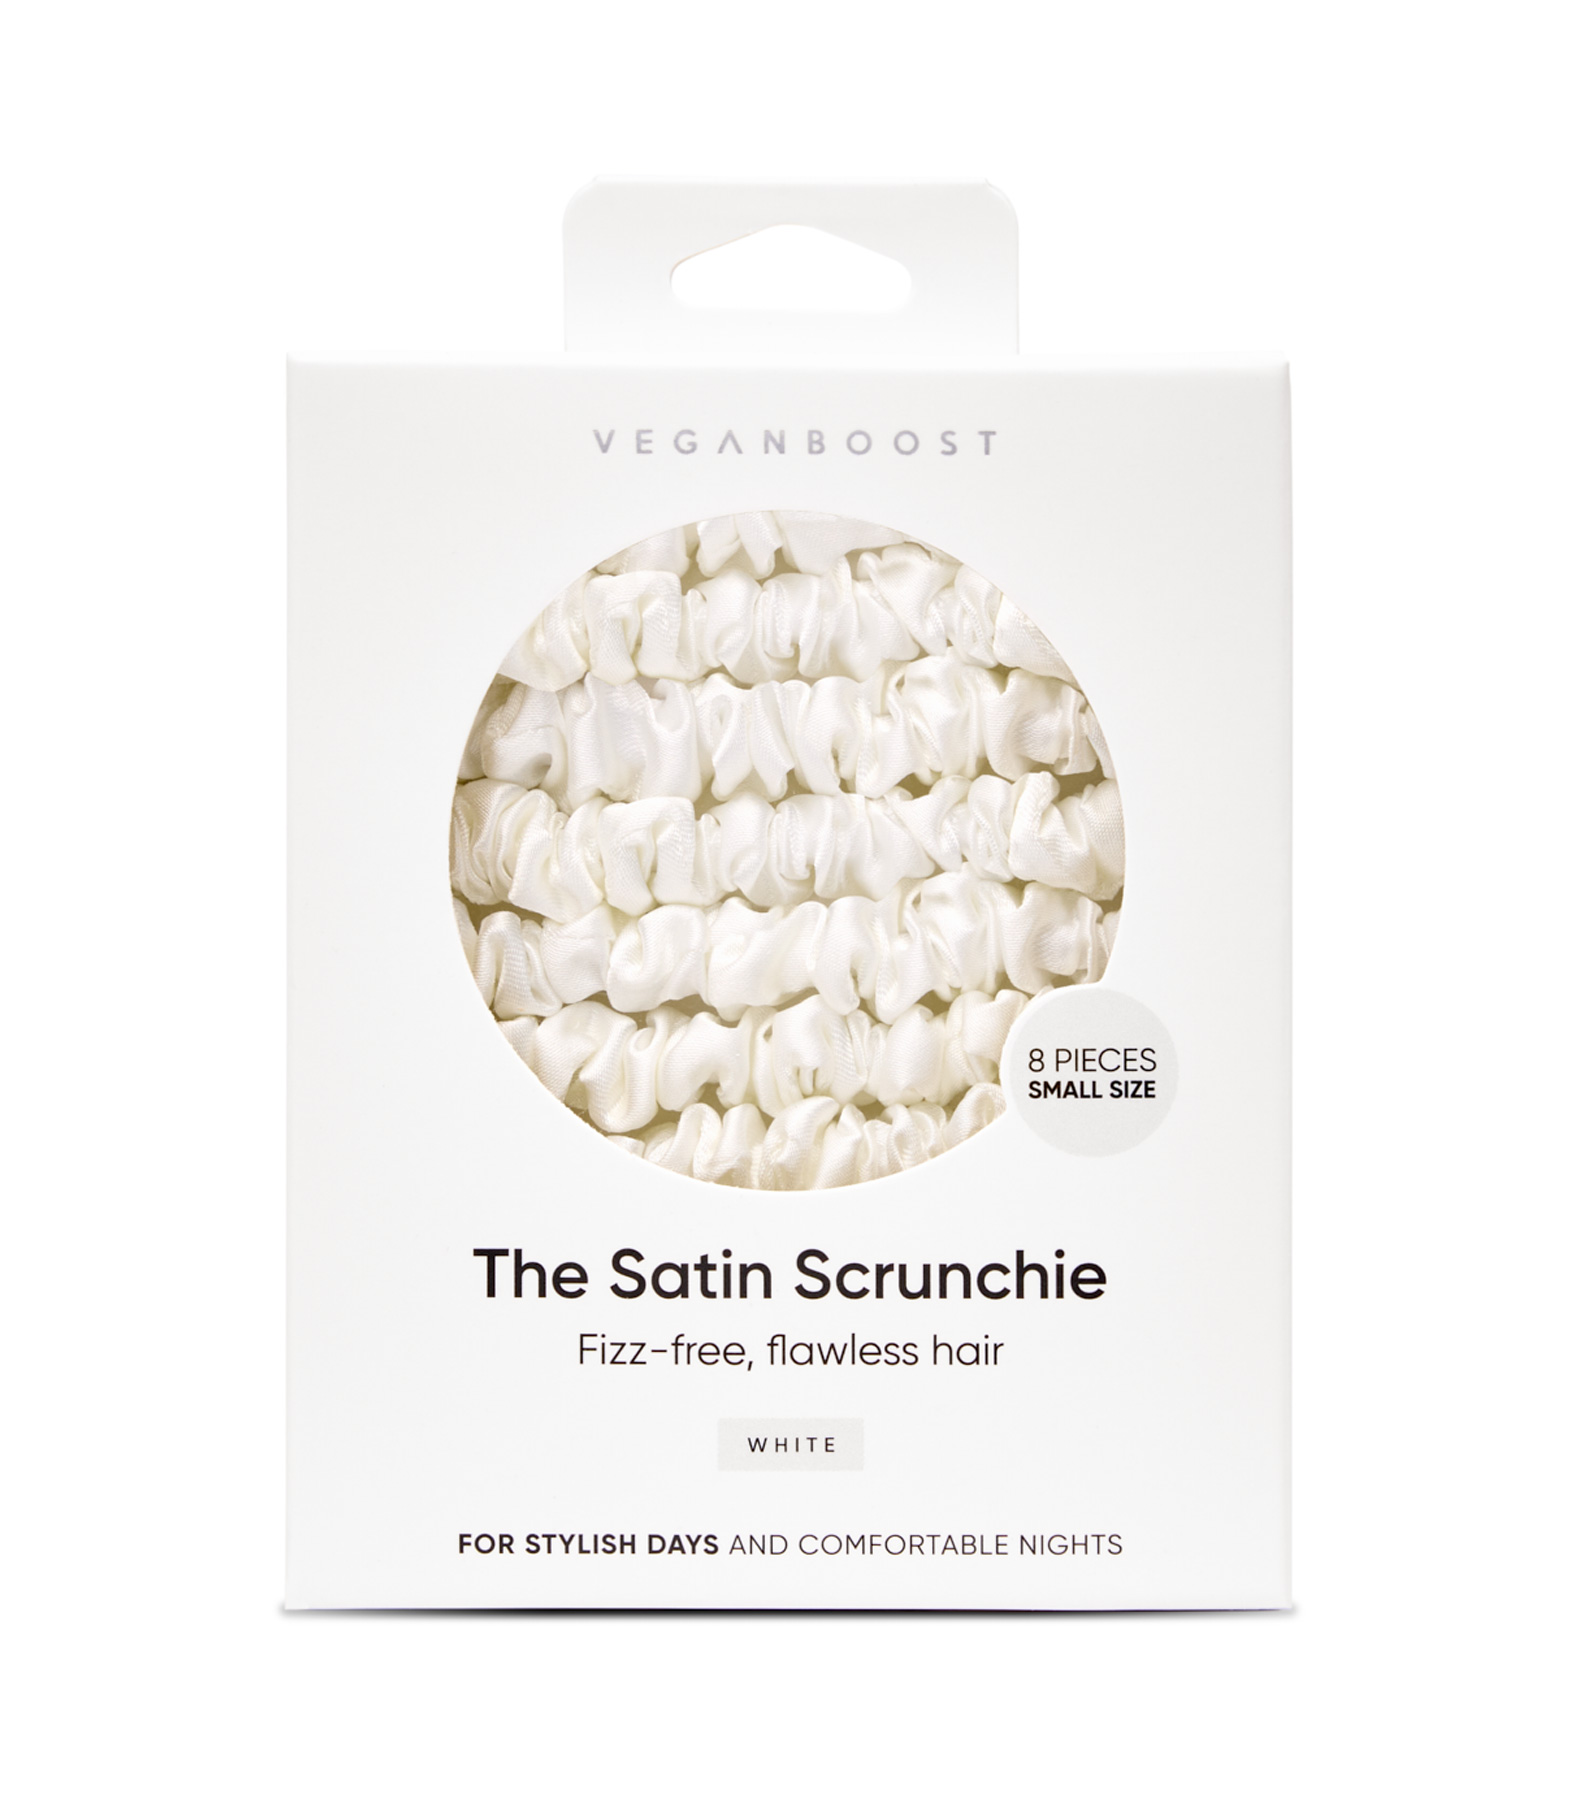 Veganboost Satin Scrunchies White Small Size